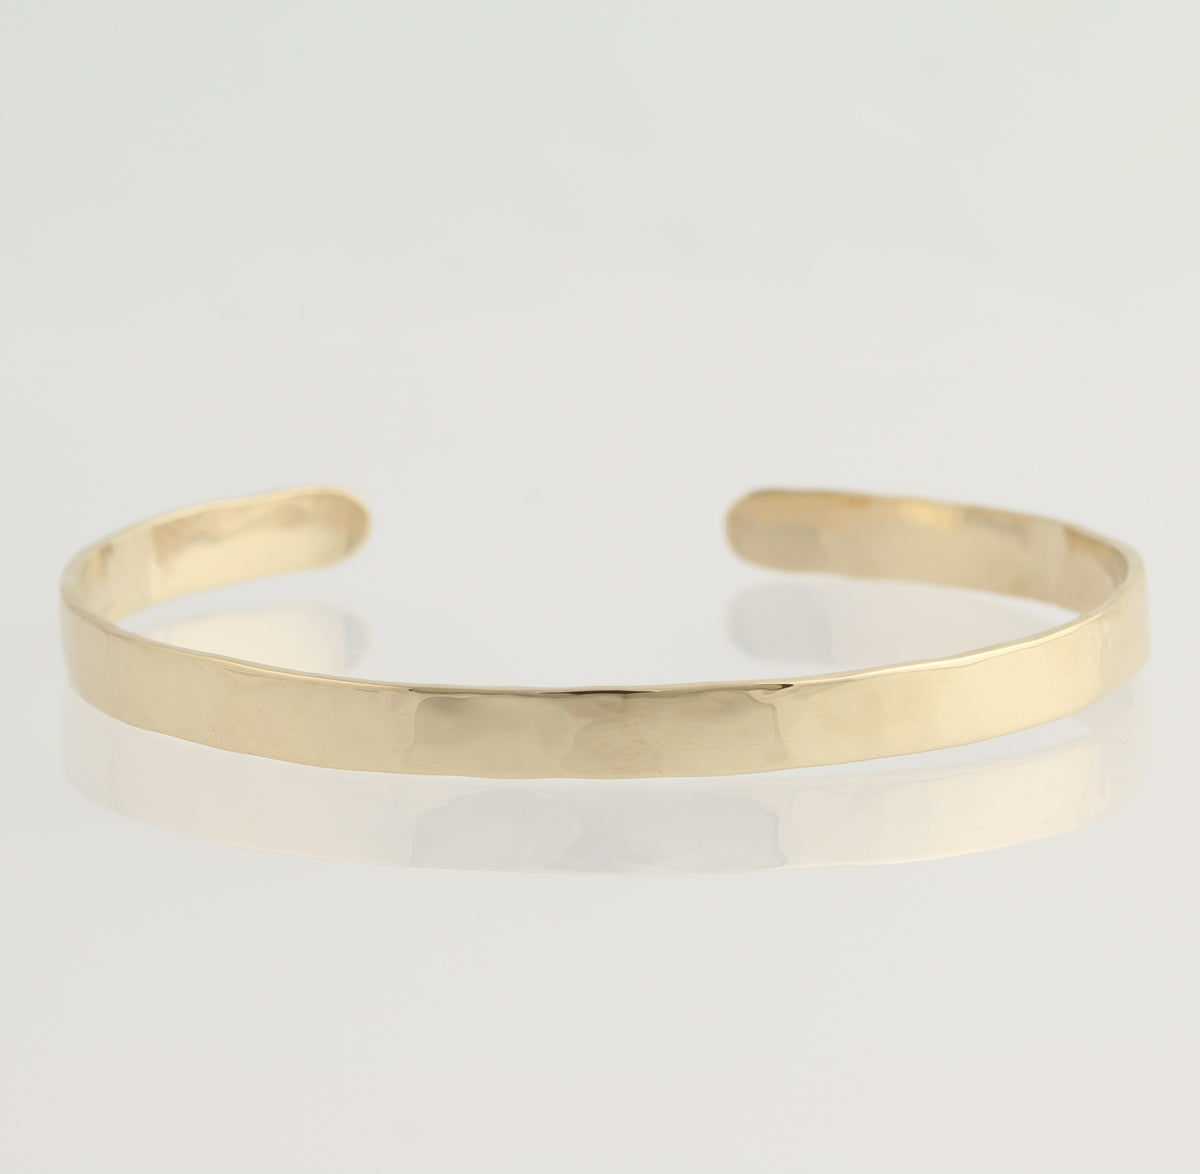 Handcrafted Hammered Gold Cuff Bracelet